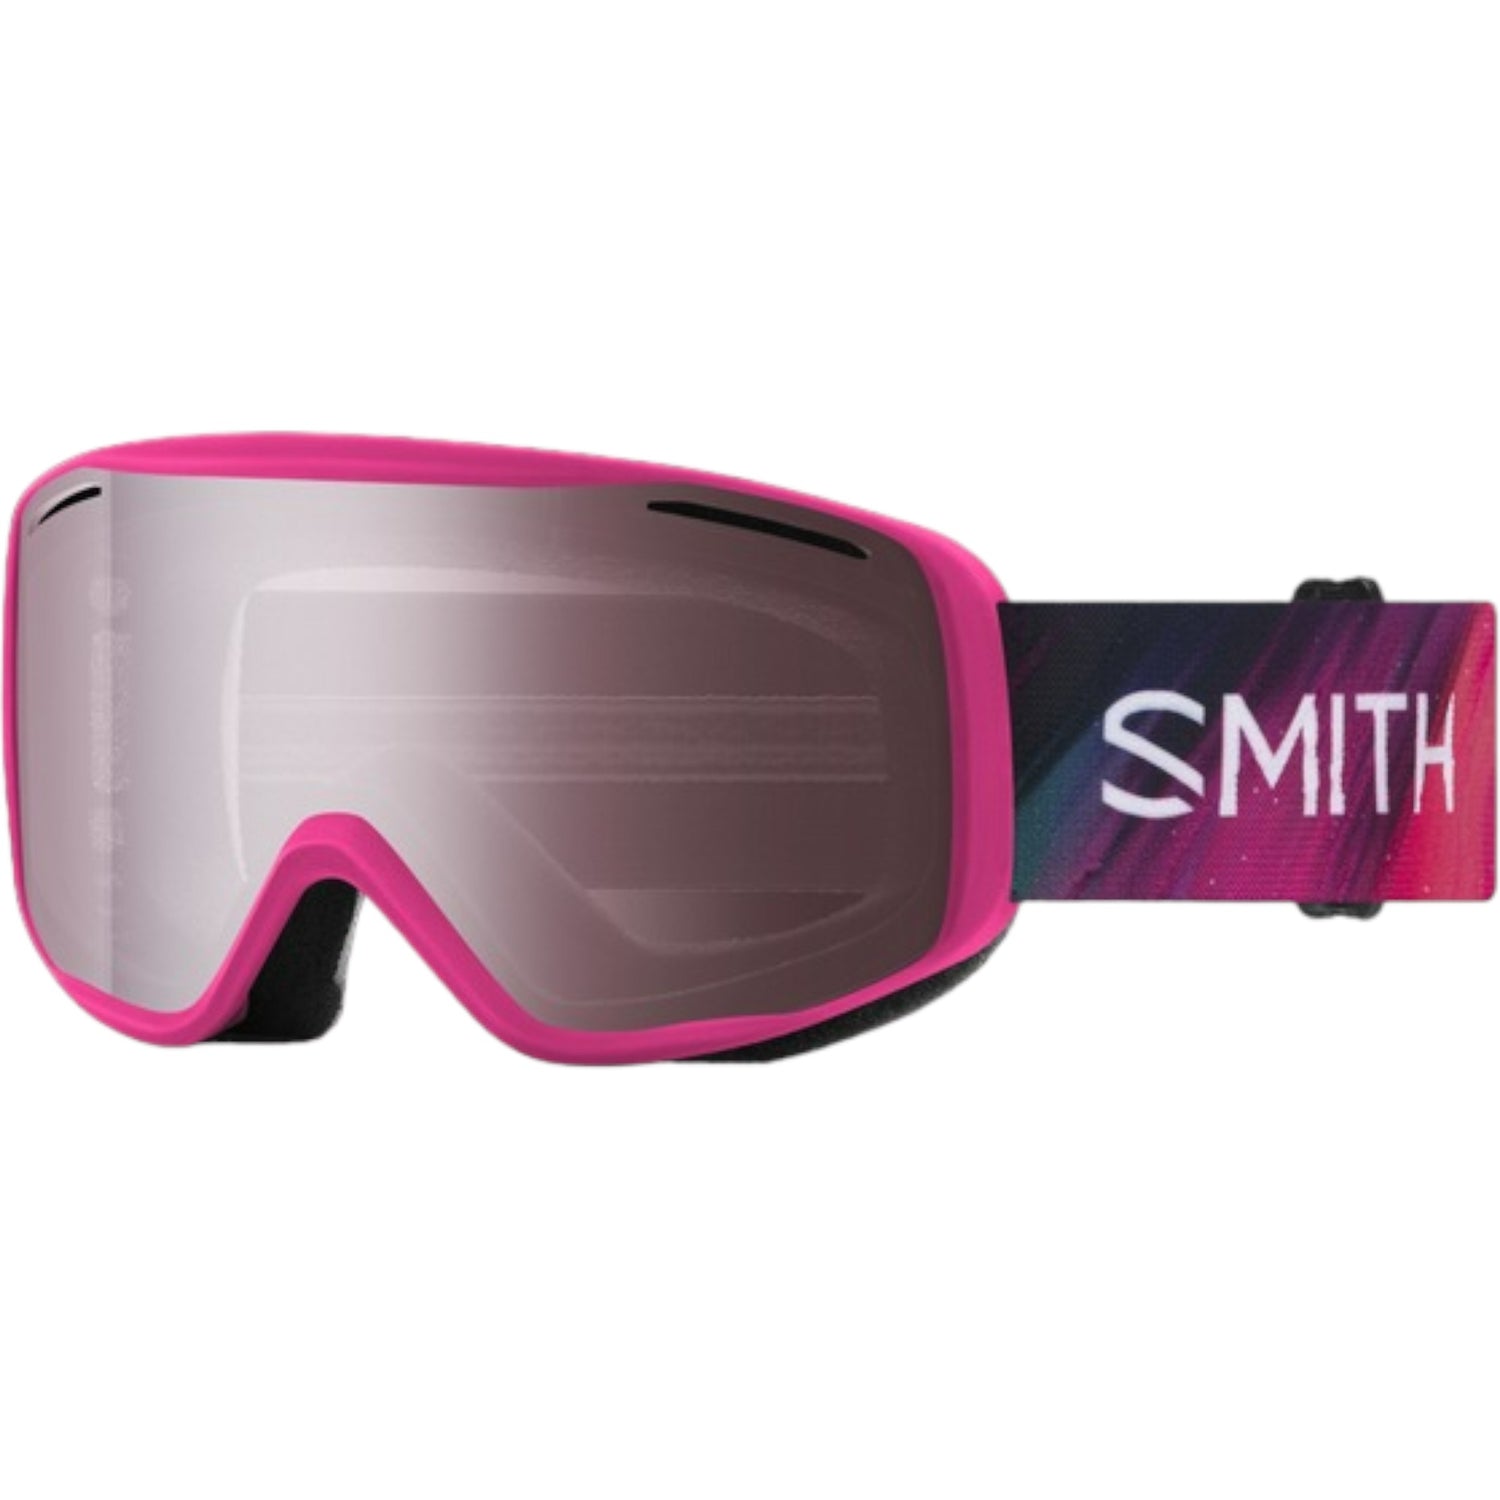 Rally Women Ski Goggles